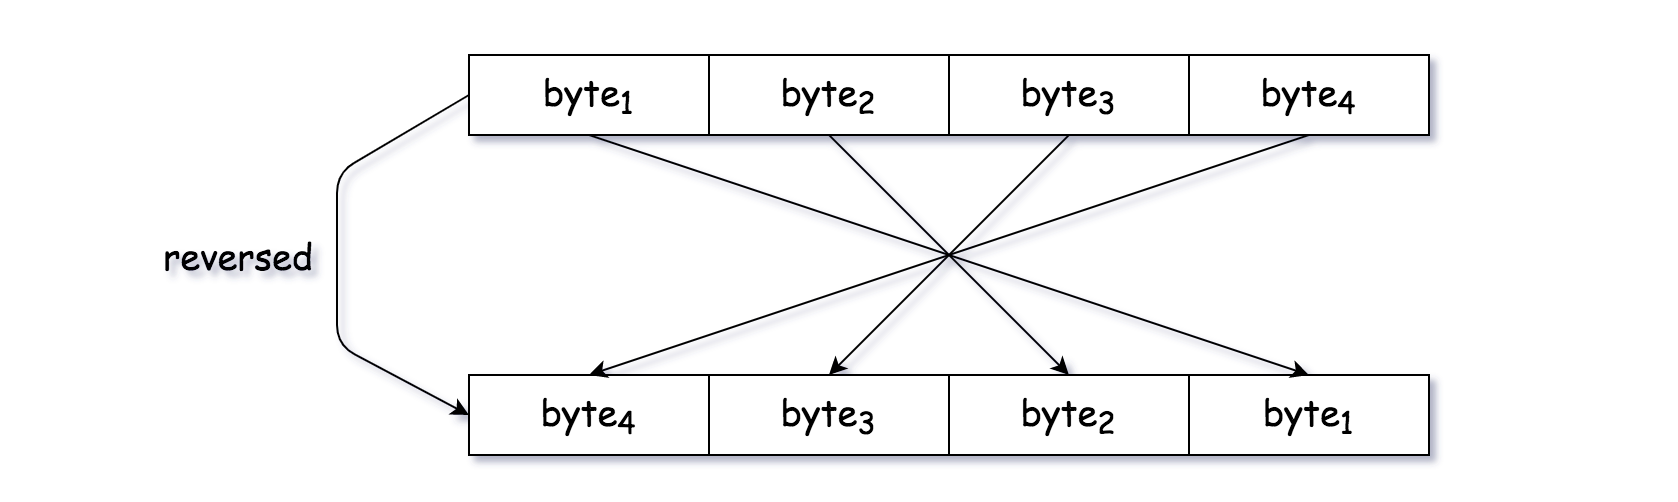 java reverse bits in a byte